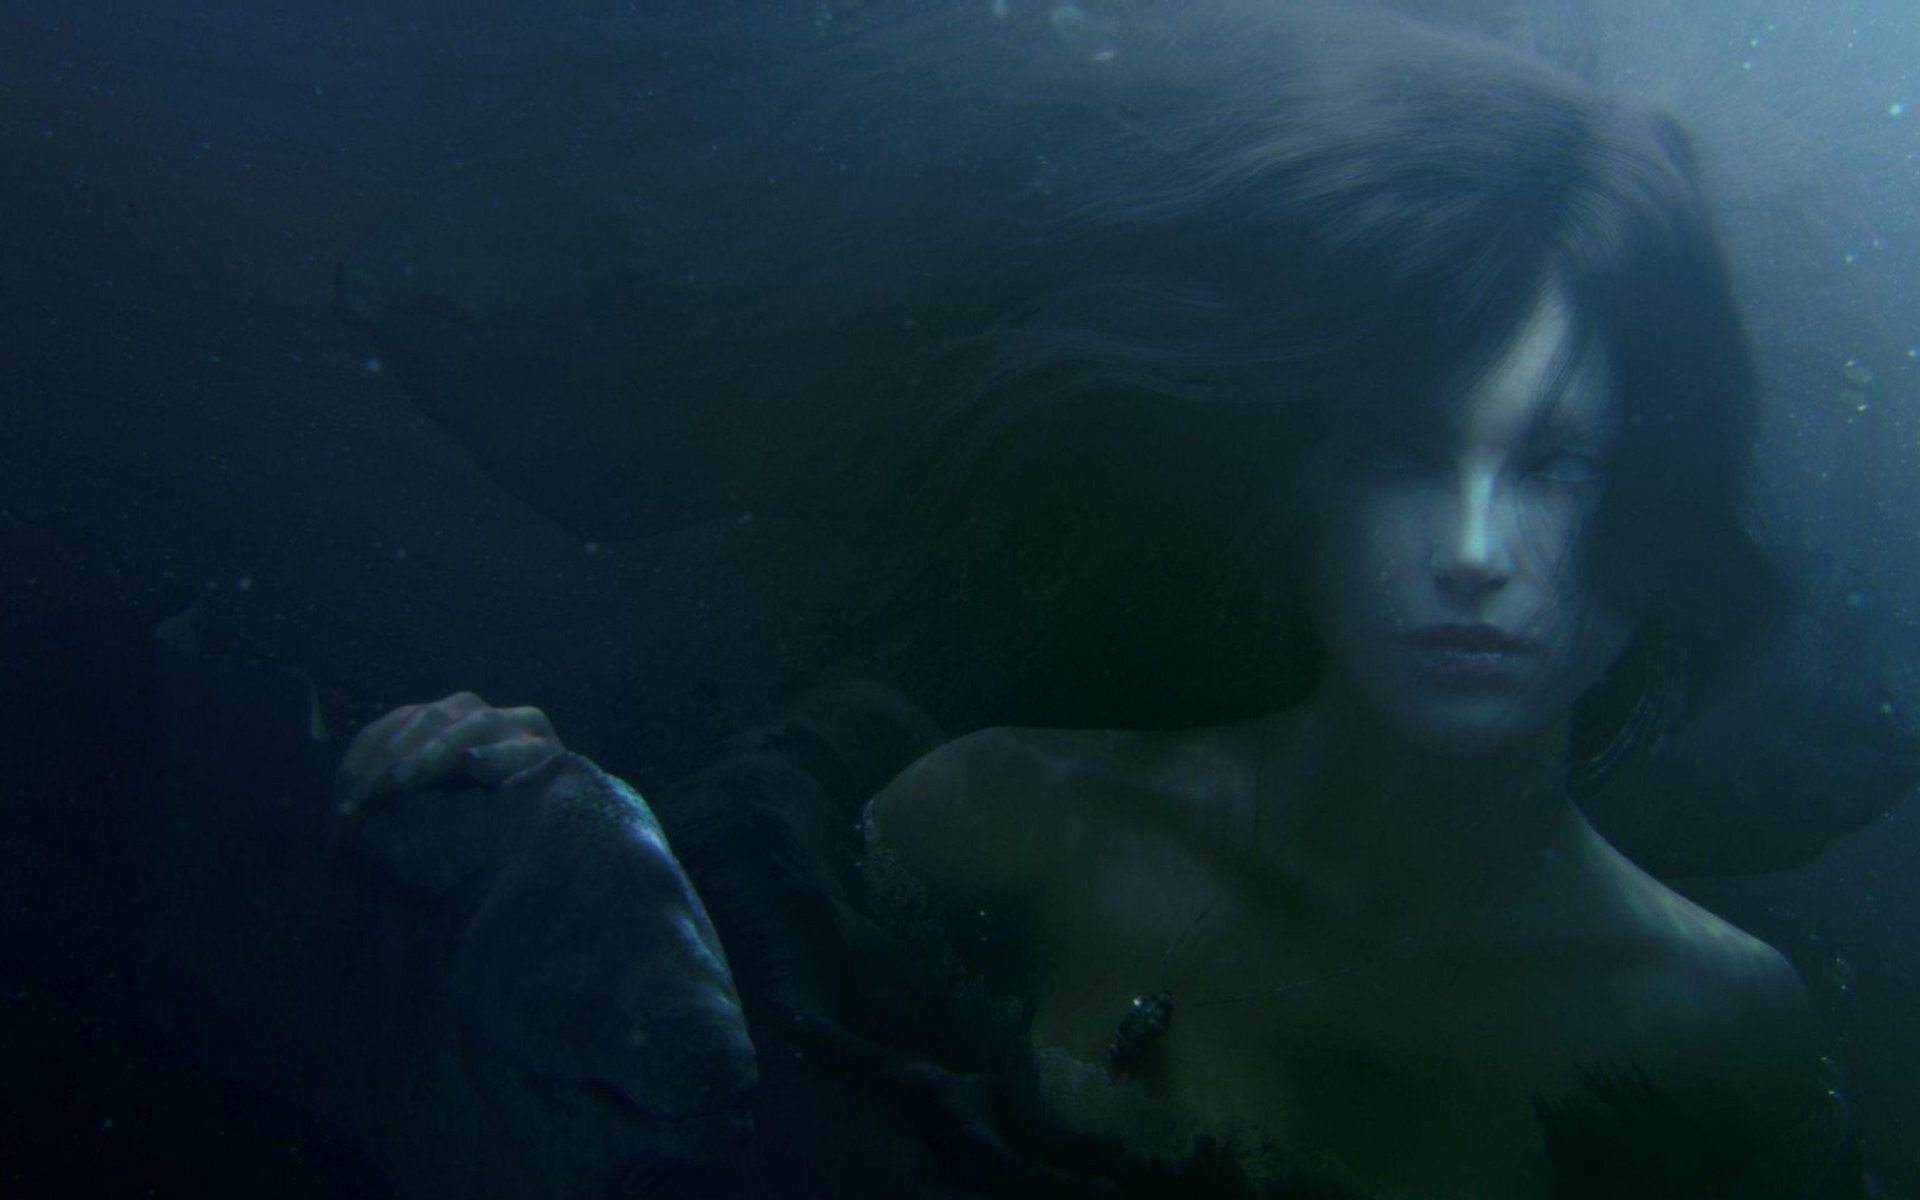 Descarga gratuita de fondo de pantalla para móvil de Fantasía, Sirena, Submarina.